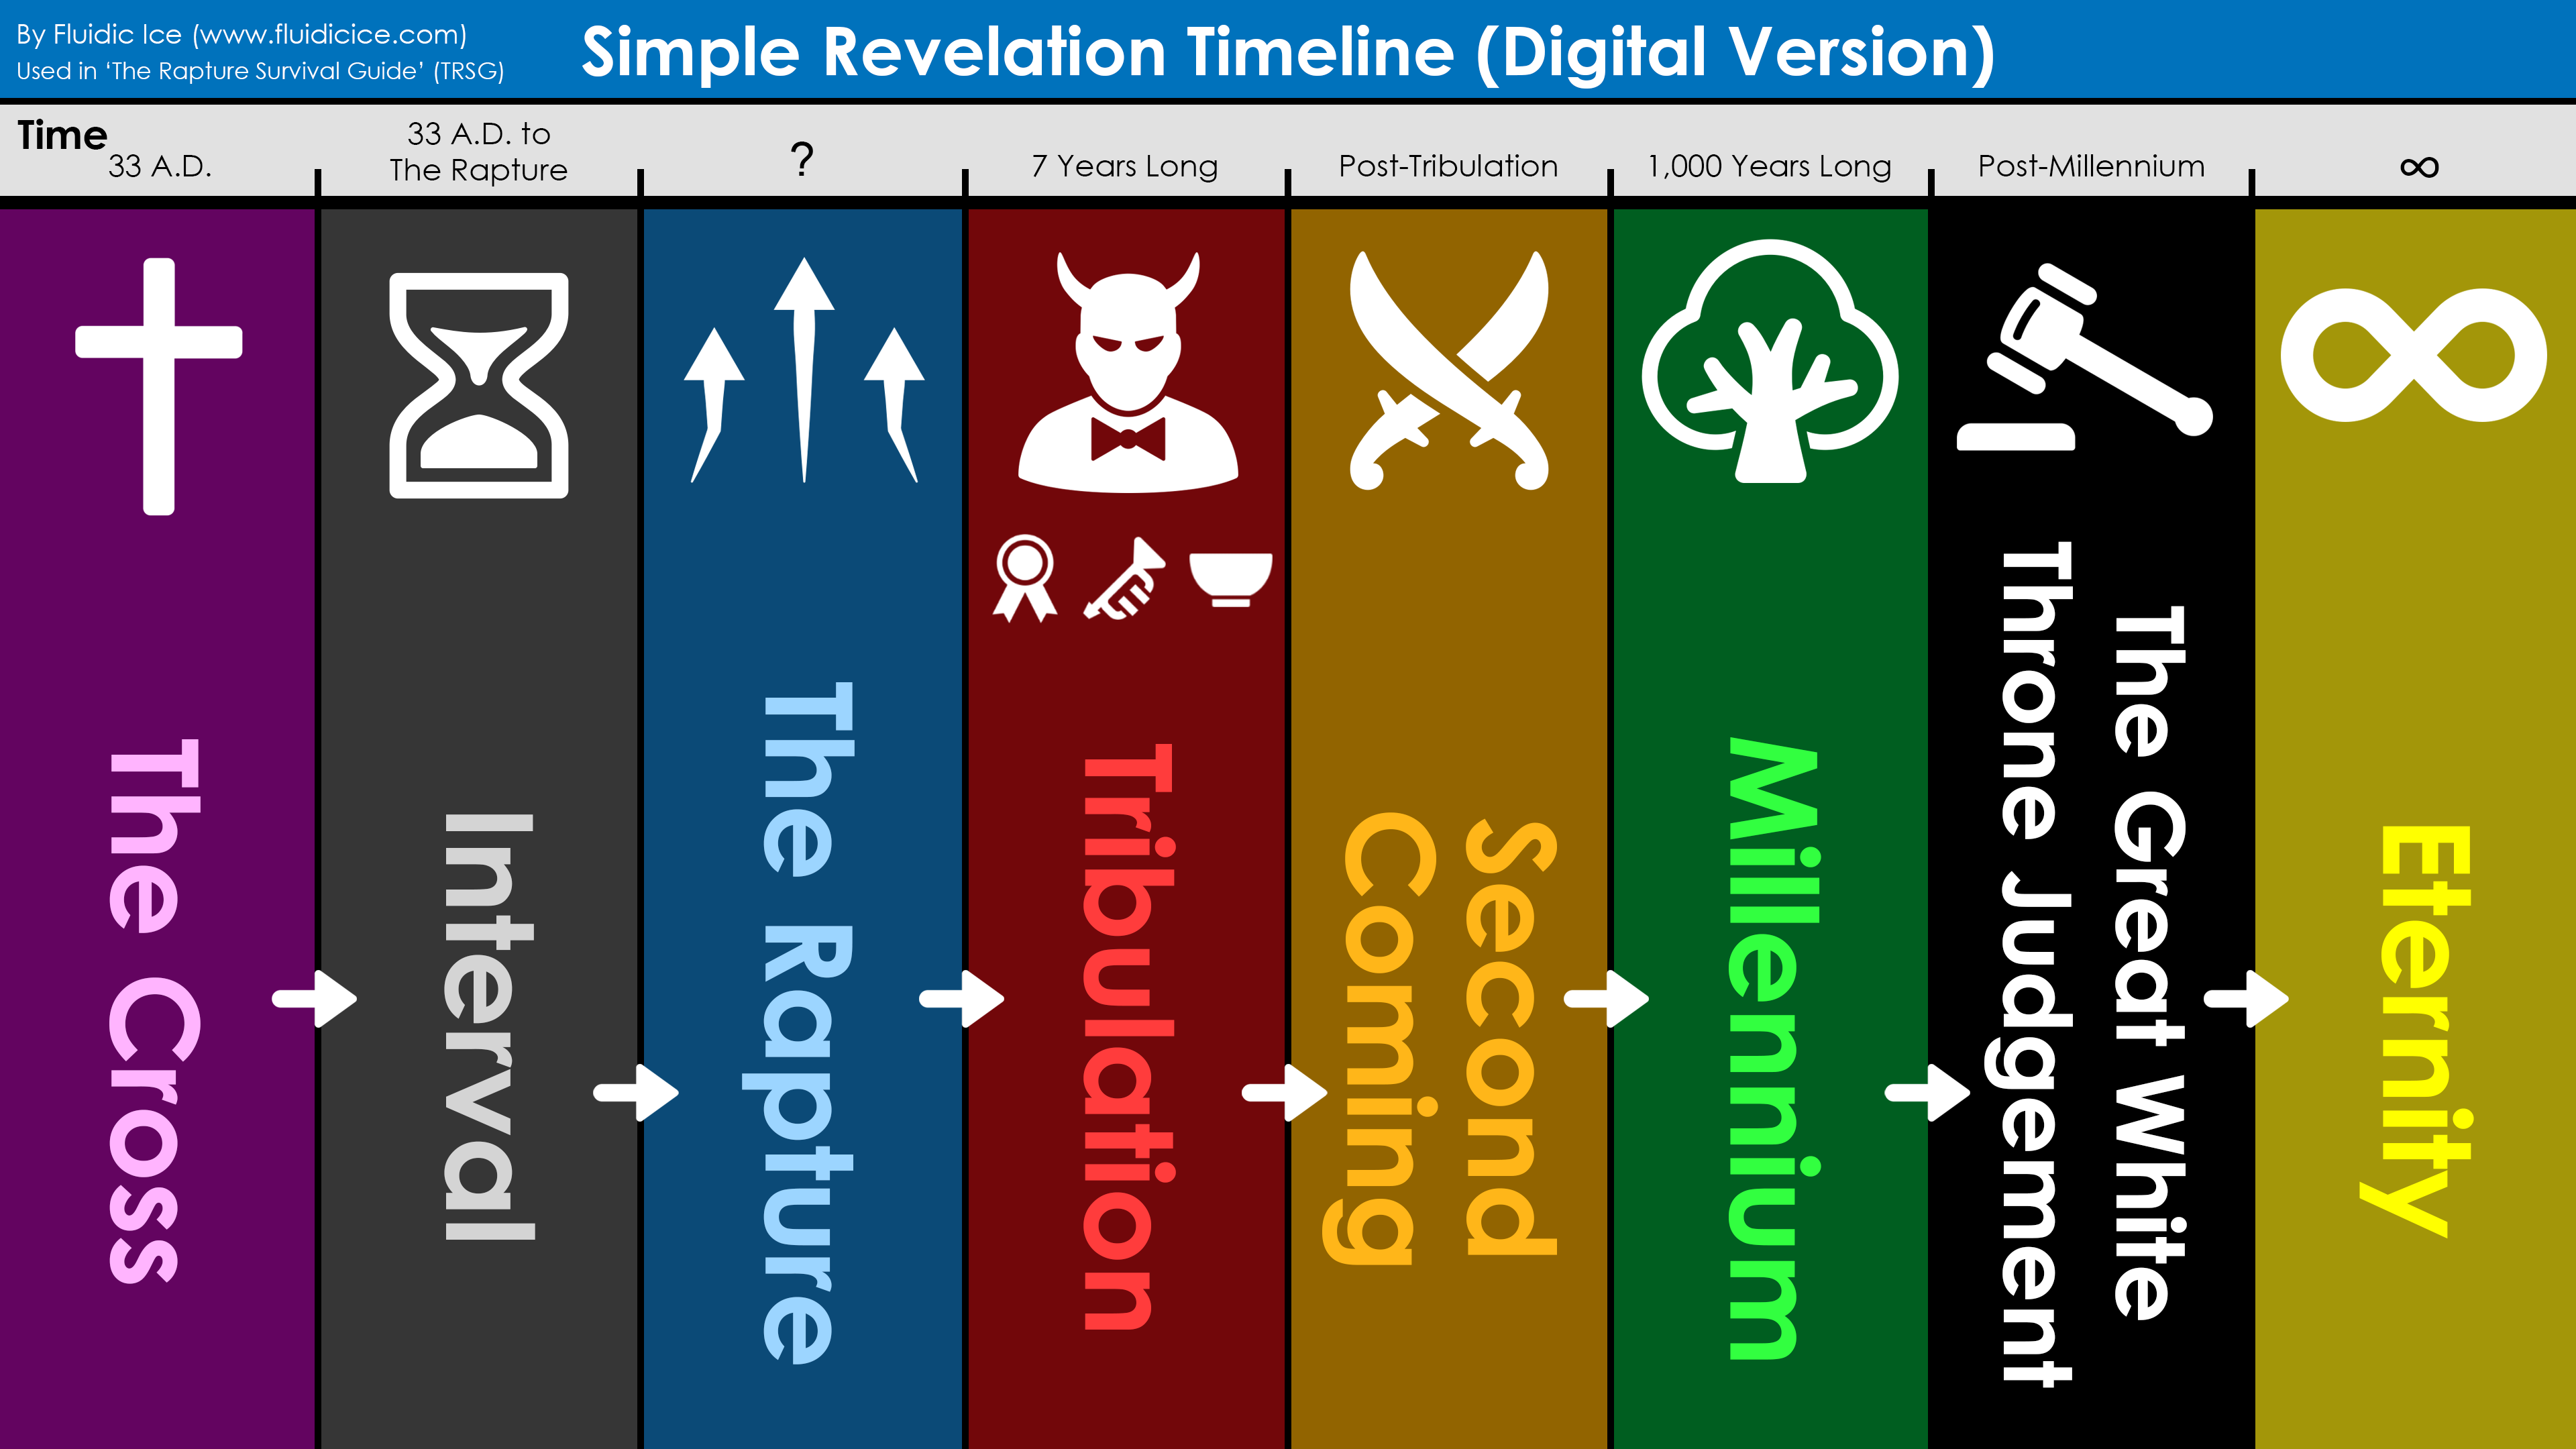 Simplified Revelation Timeline